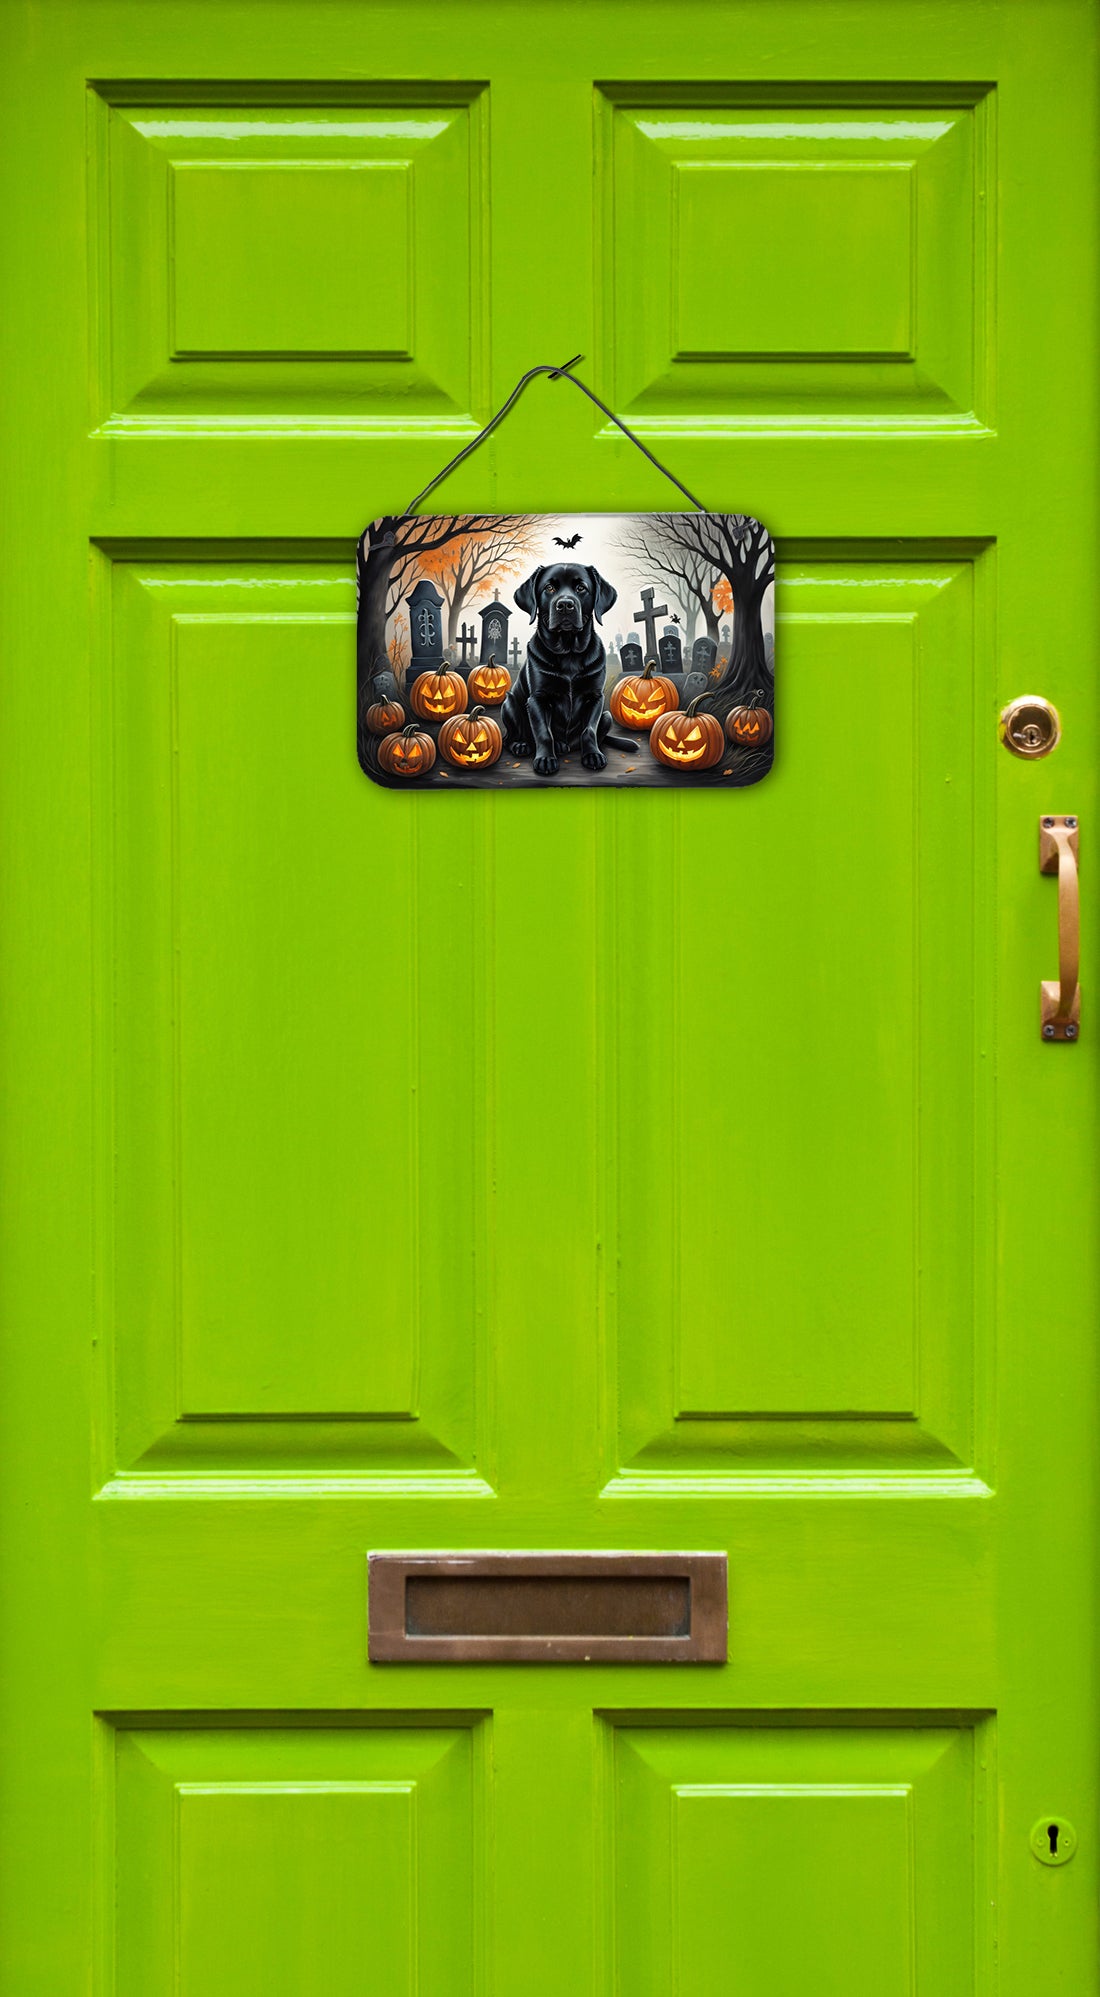 Buy this Black Labrador Retriever Spooky Halloween Wall or Door Hanging Prints